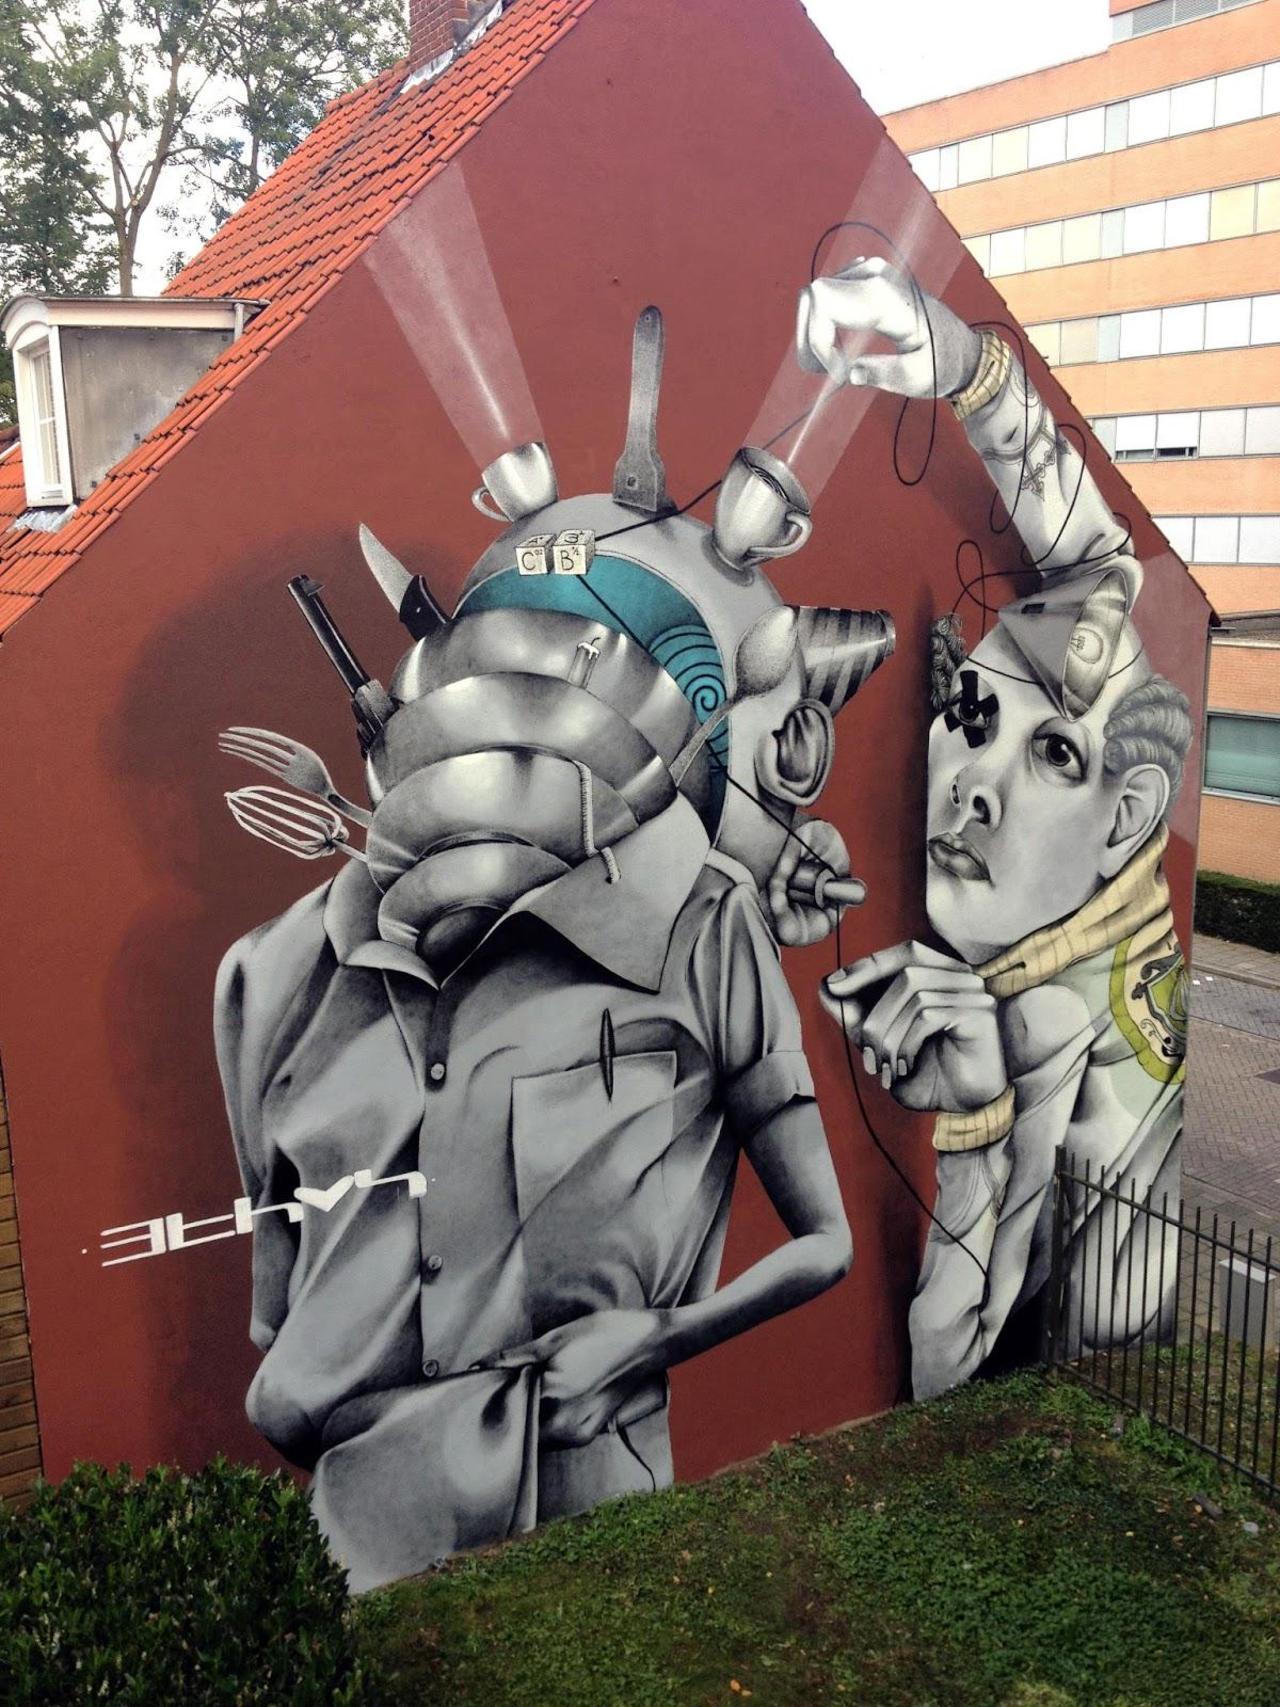 RT @thx2111: Claudio Ethos creates a new mural in Heerlen, Netherlands. #StreetArt #Graffiti #Mural http://t.co/TvYPBZlI25